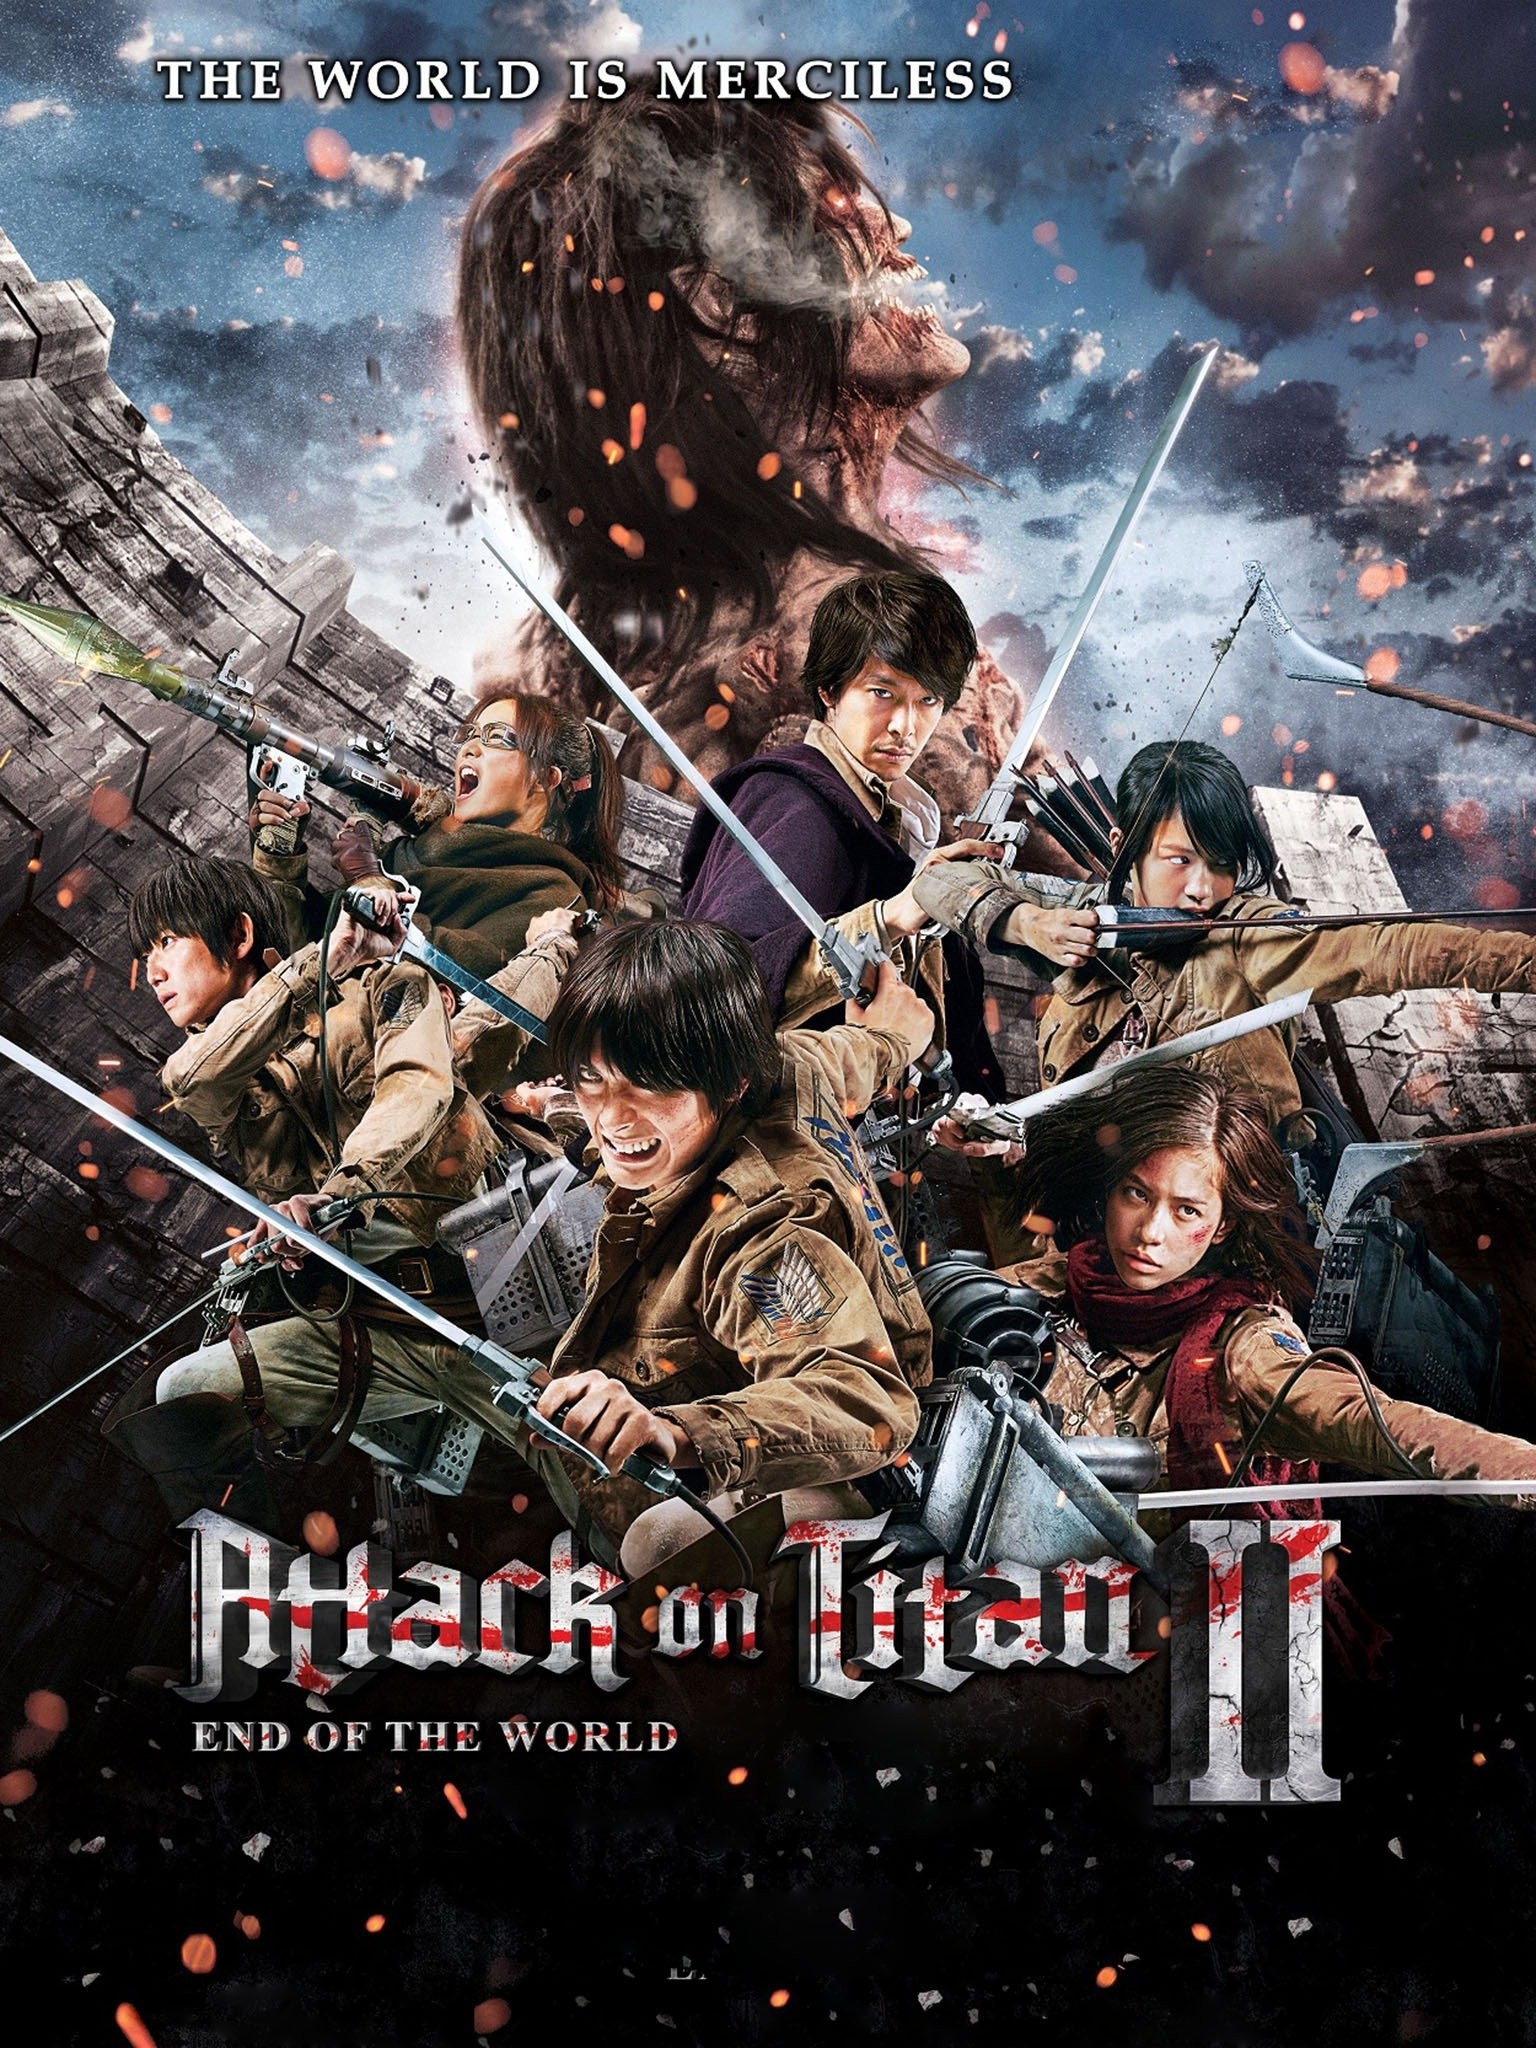 Attack on Titan final season part 2, release date, trailer, cast